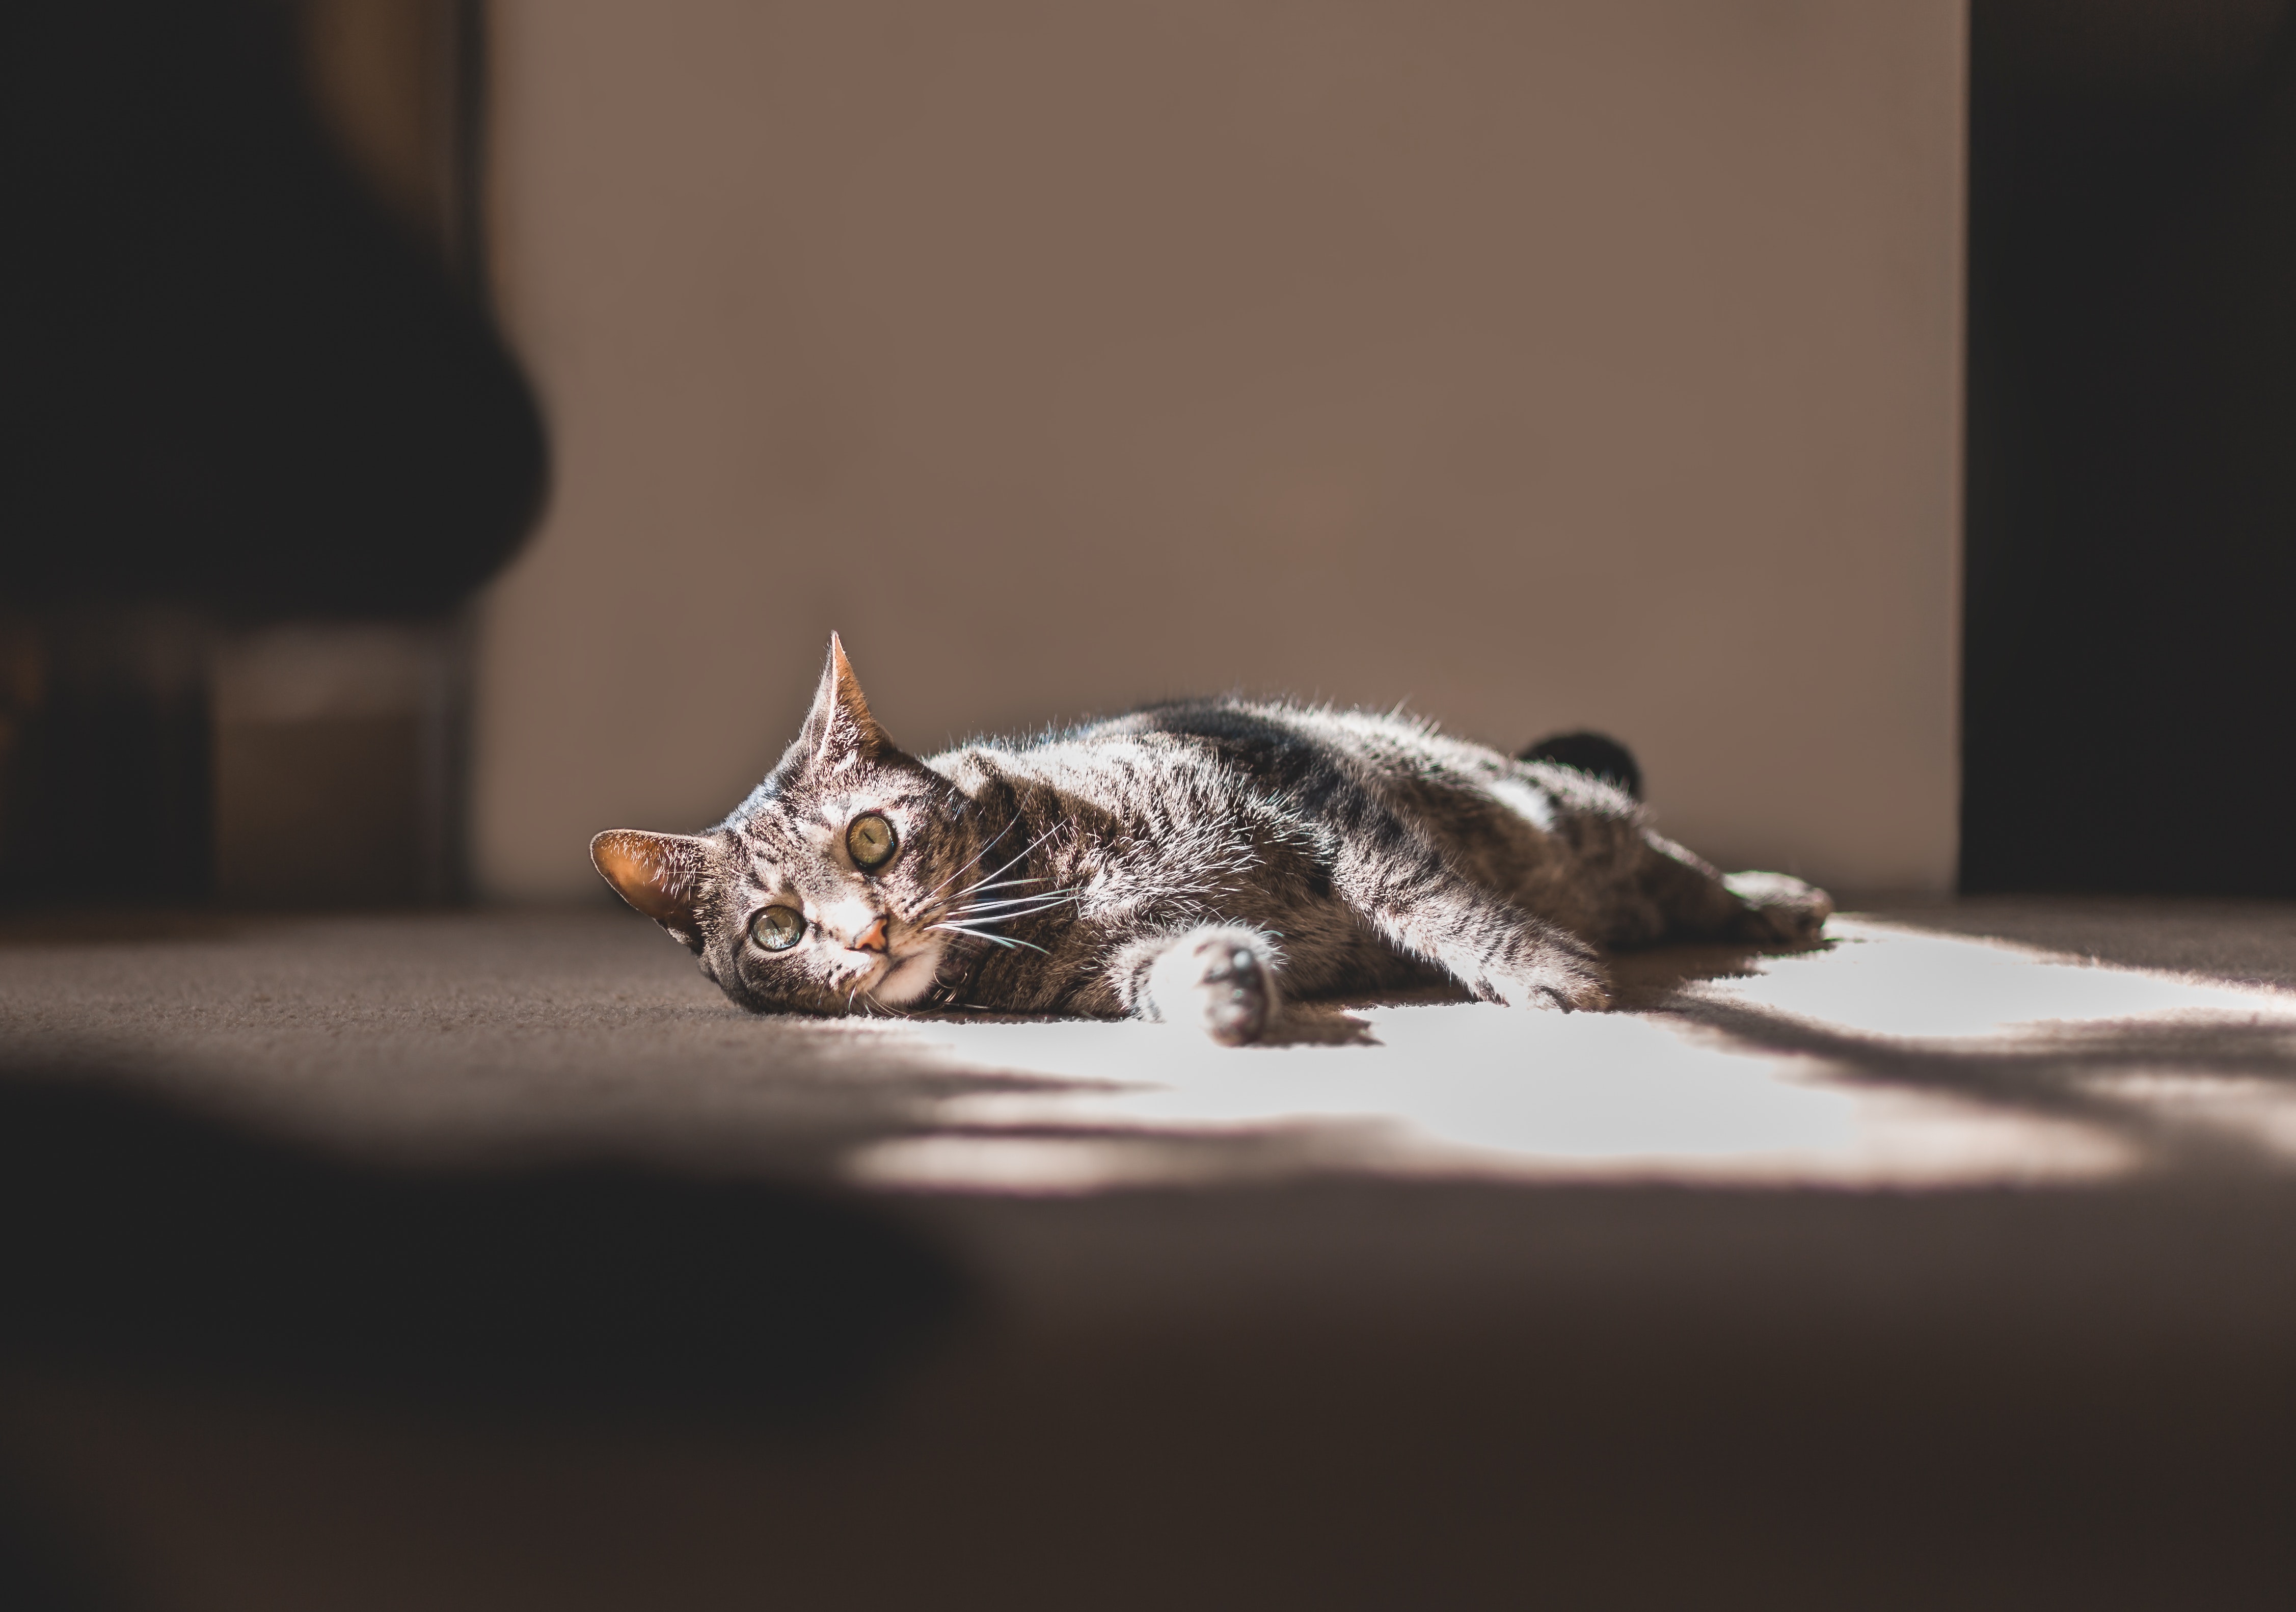 Cat on Carpet